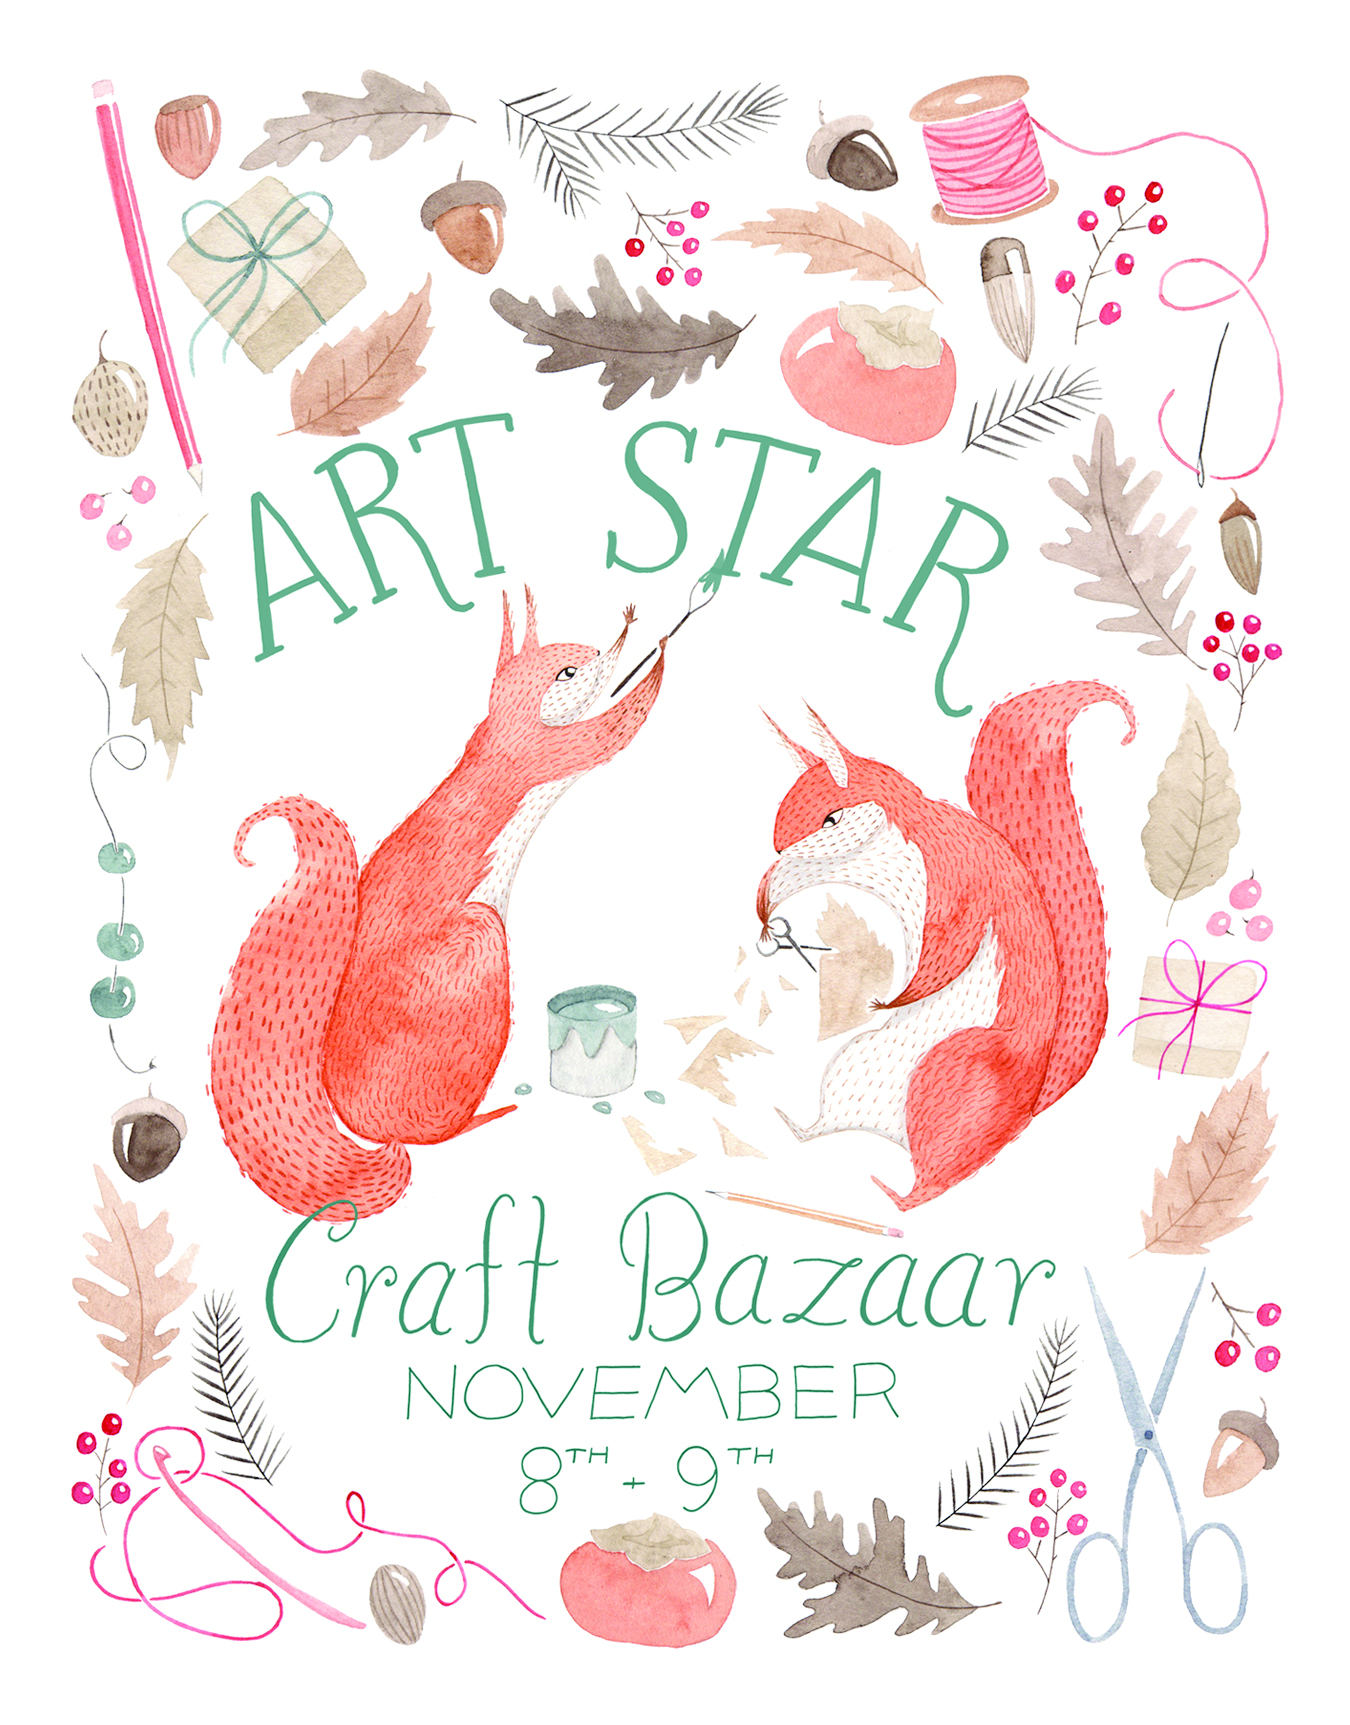 Art Star Craft Bazaar